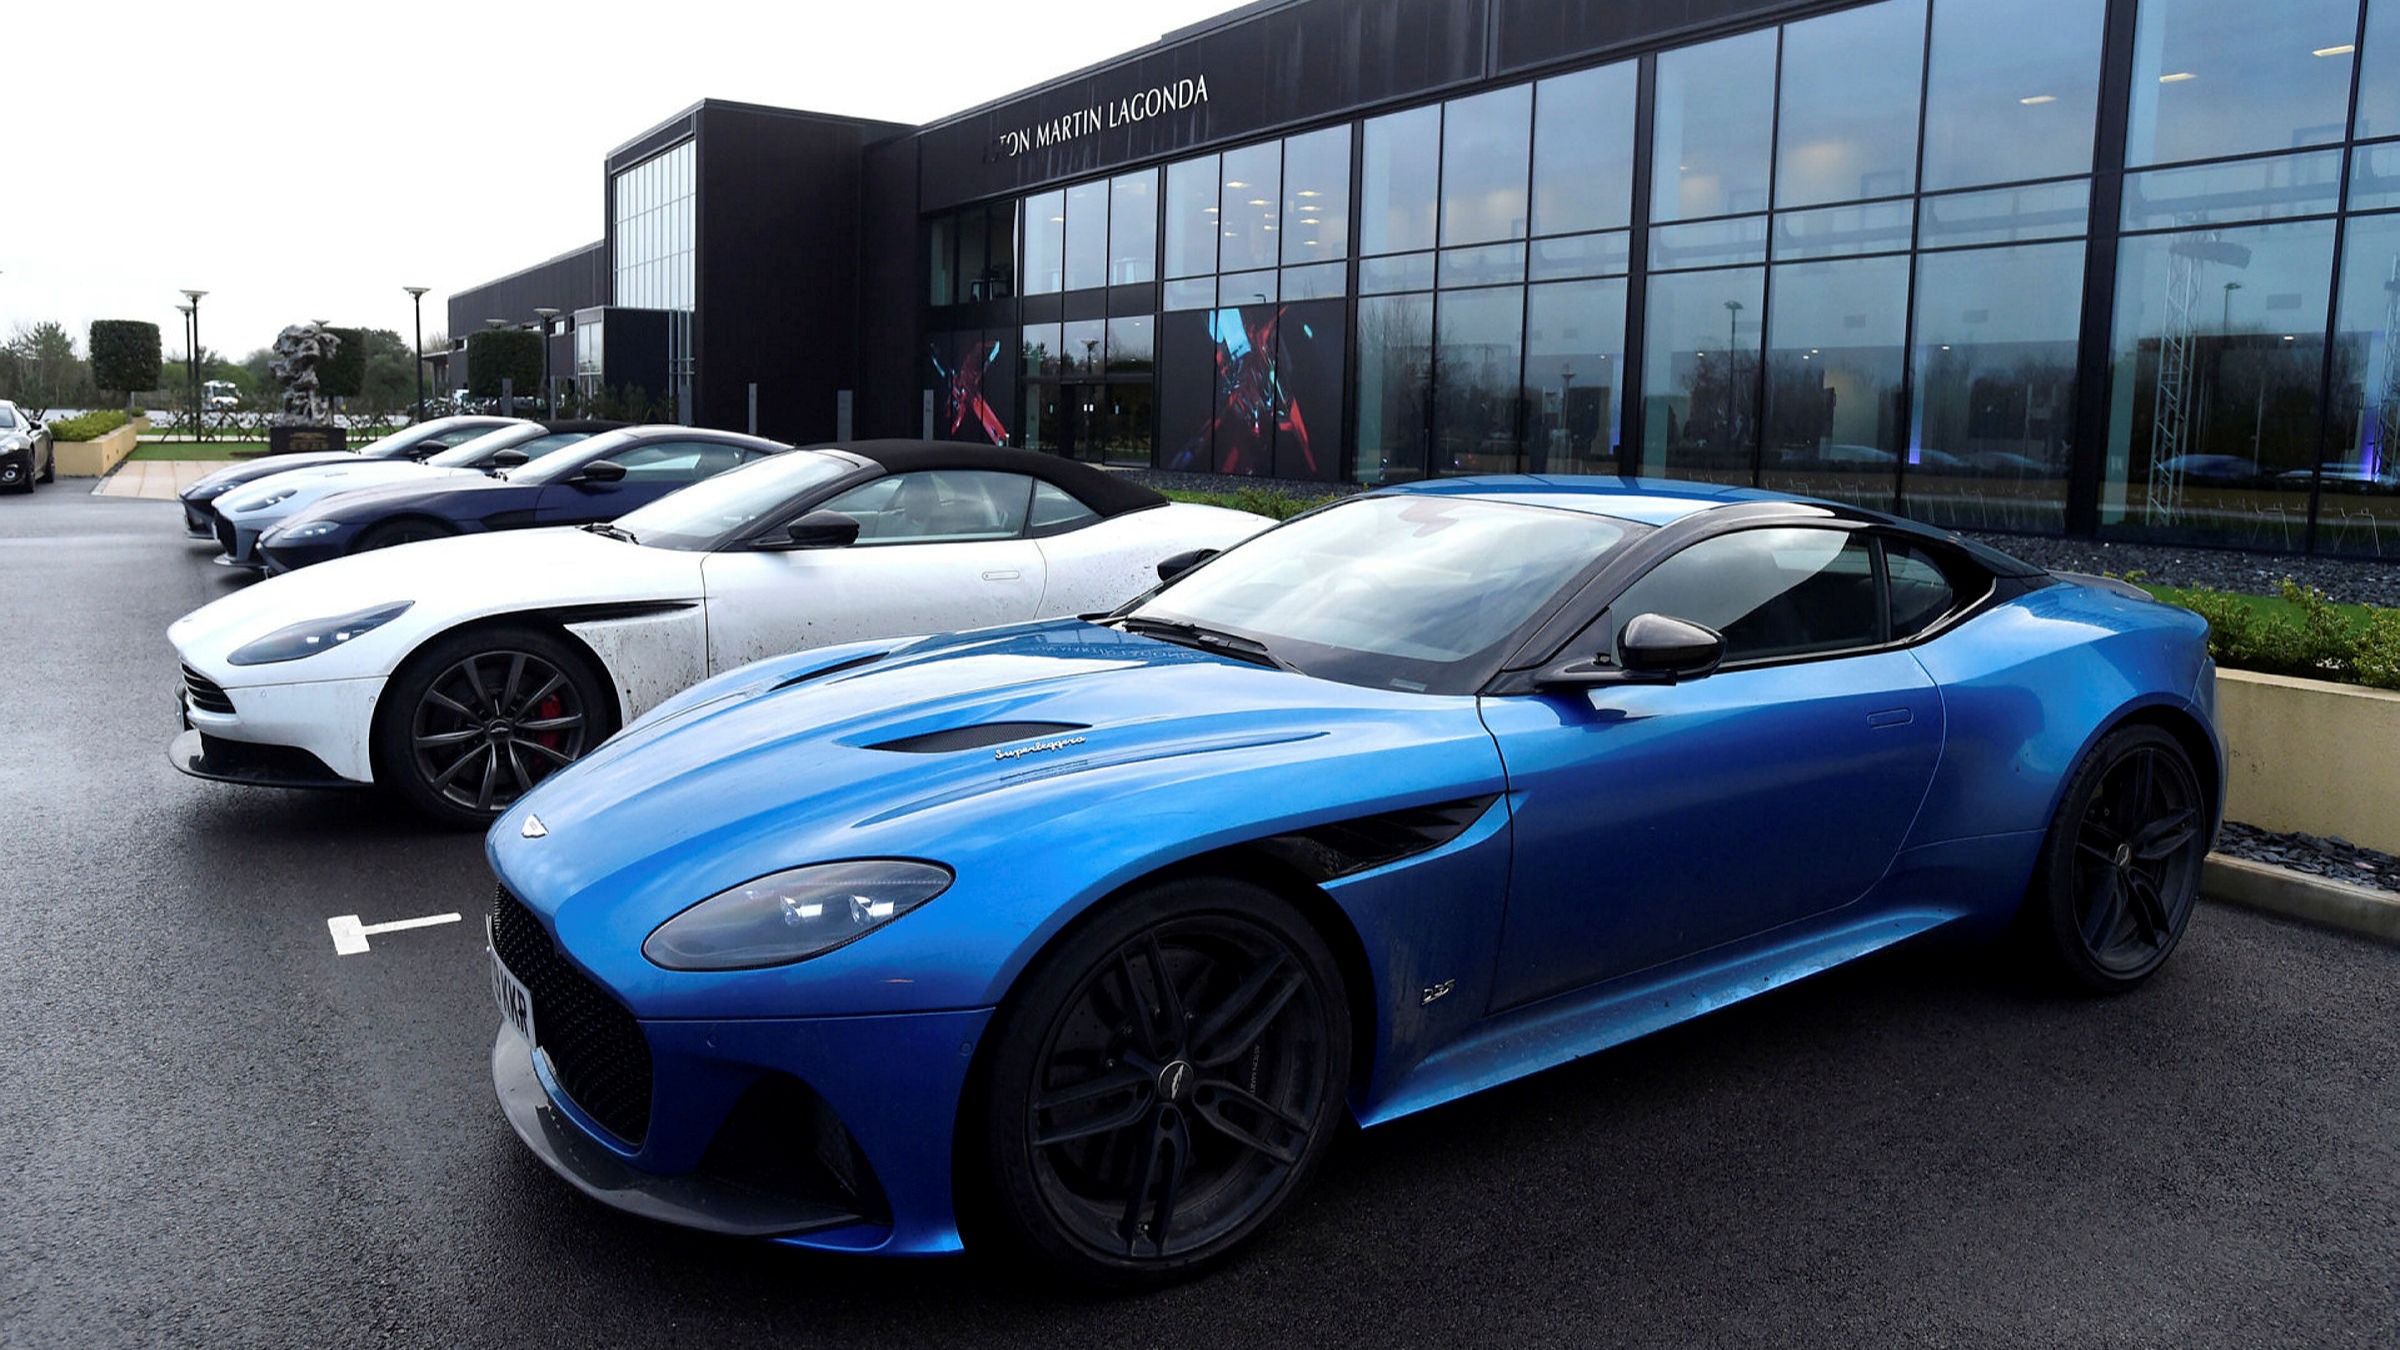 A row of Aston Martin cars outside a dealership